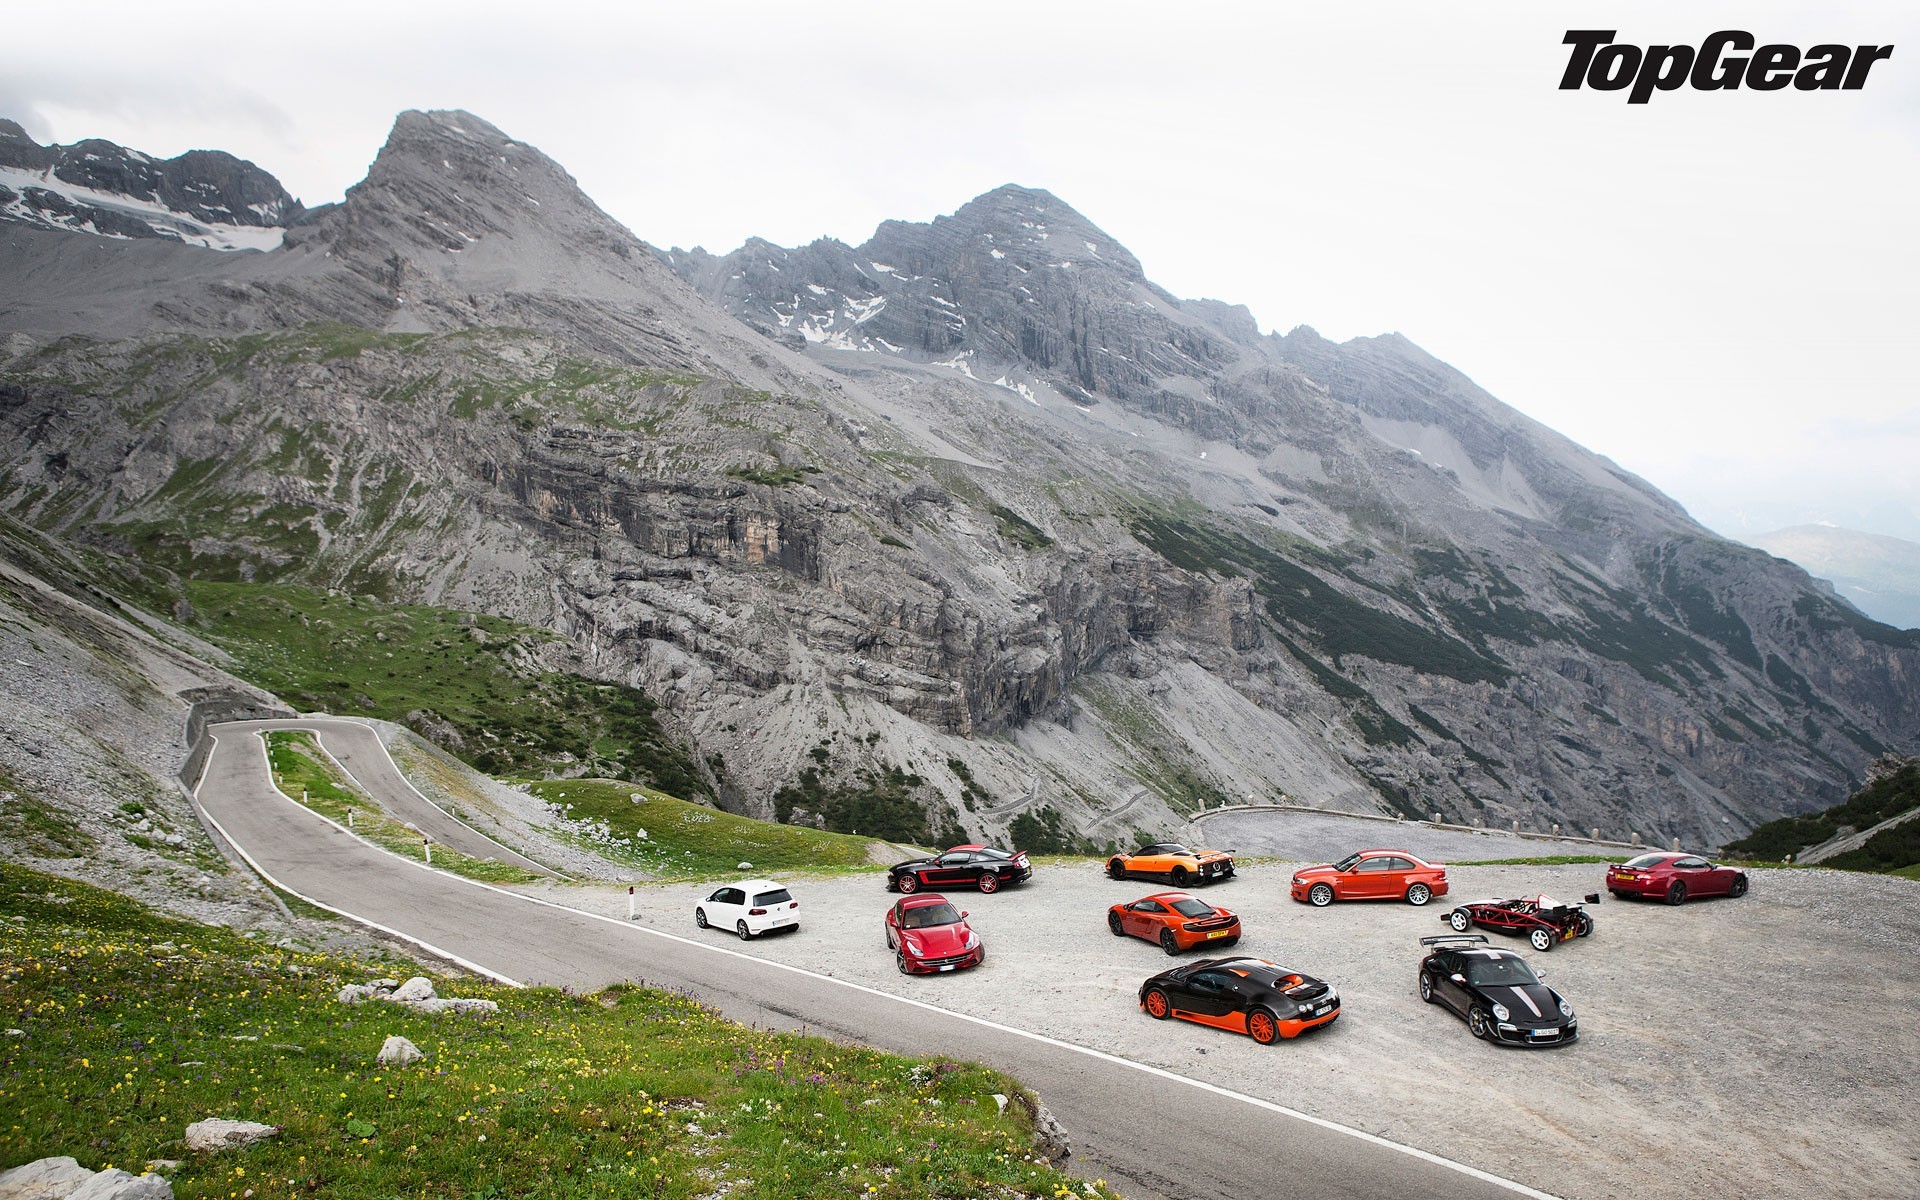 General 1920x1200 Top Gear vehicle mountains road nature car landscape